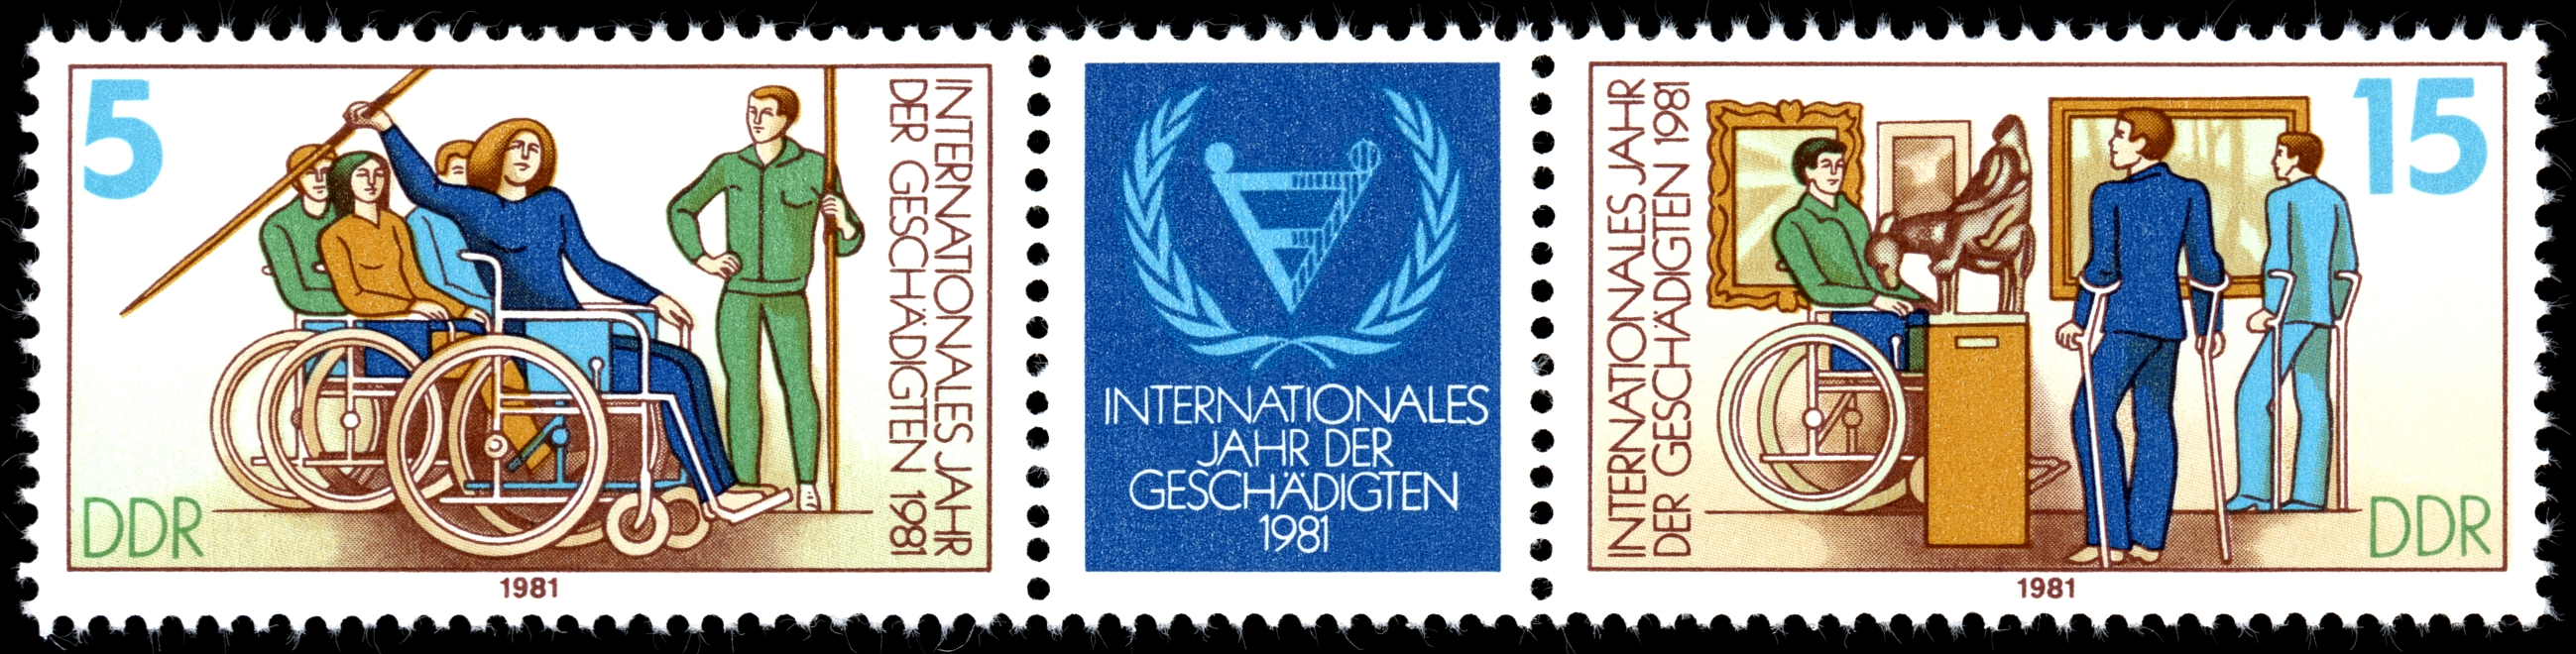 Stamps of Germany (DDR) 1981, MiNr Zusammendruck 2621, 2622